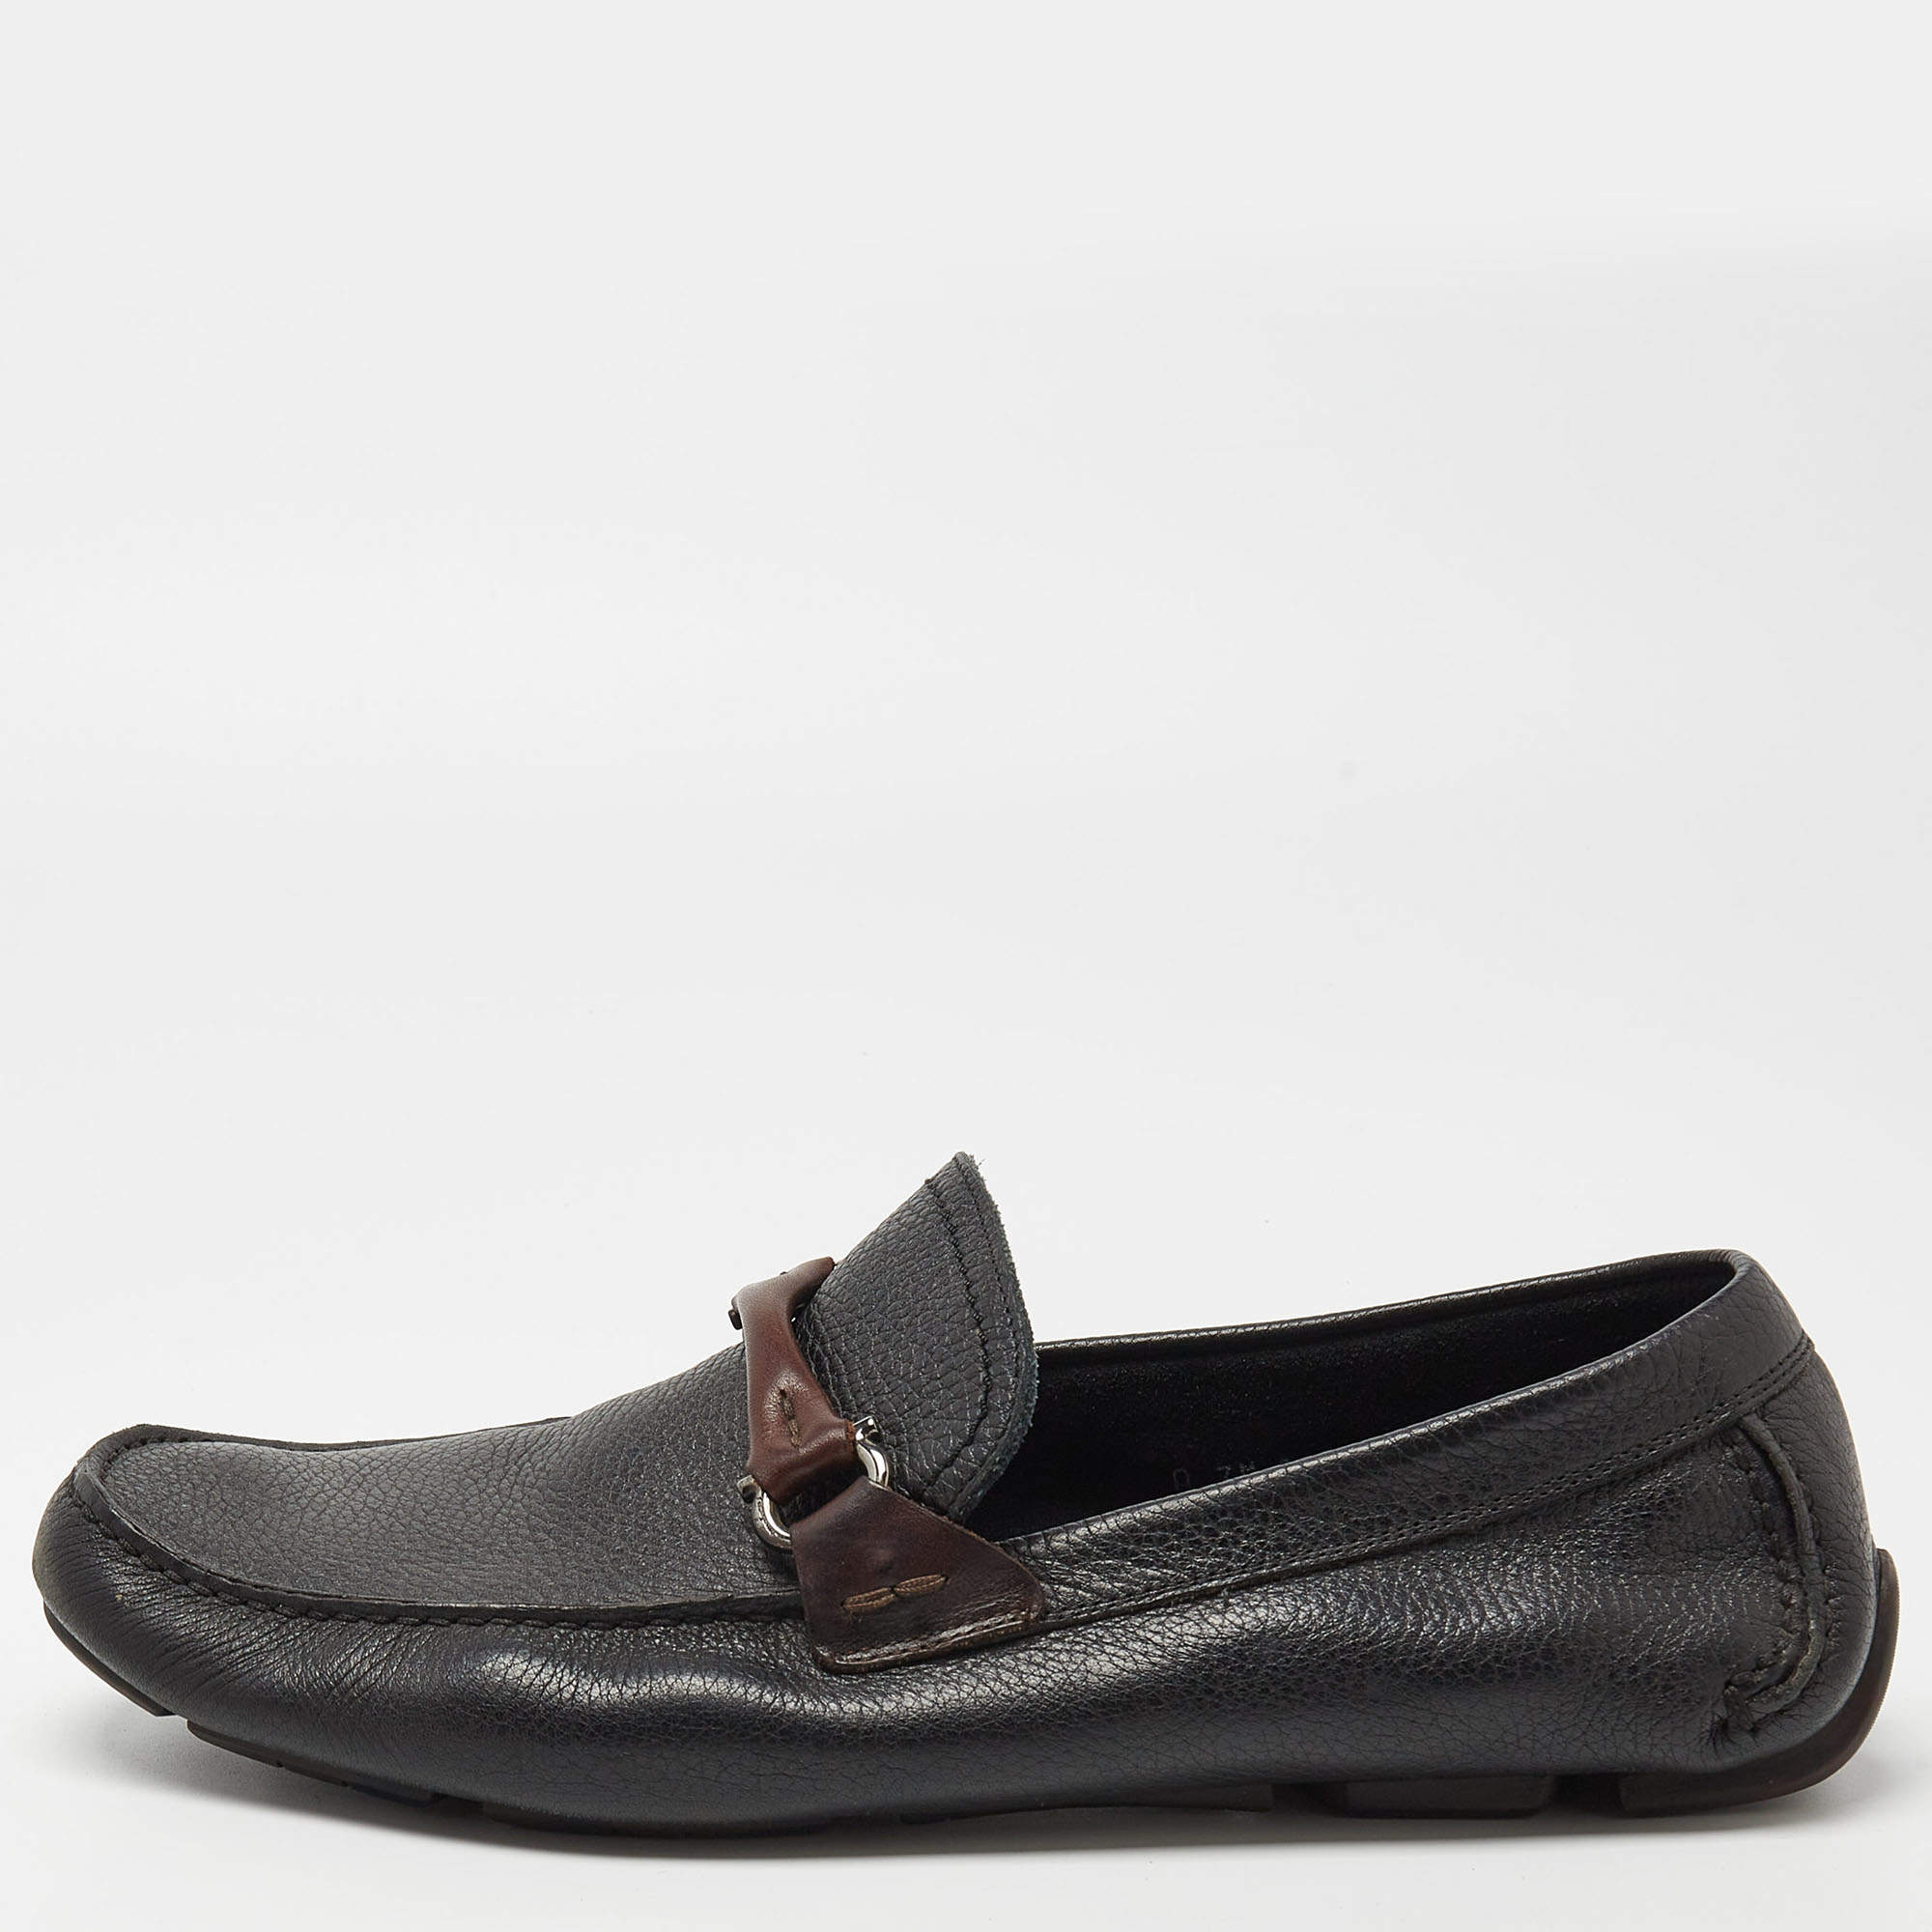 Salvatore Ferragamo Black Leather Slip On Loafers Size 42.5 